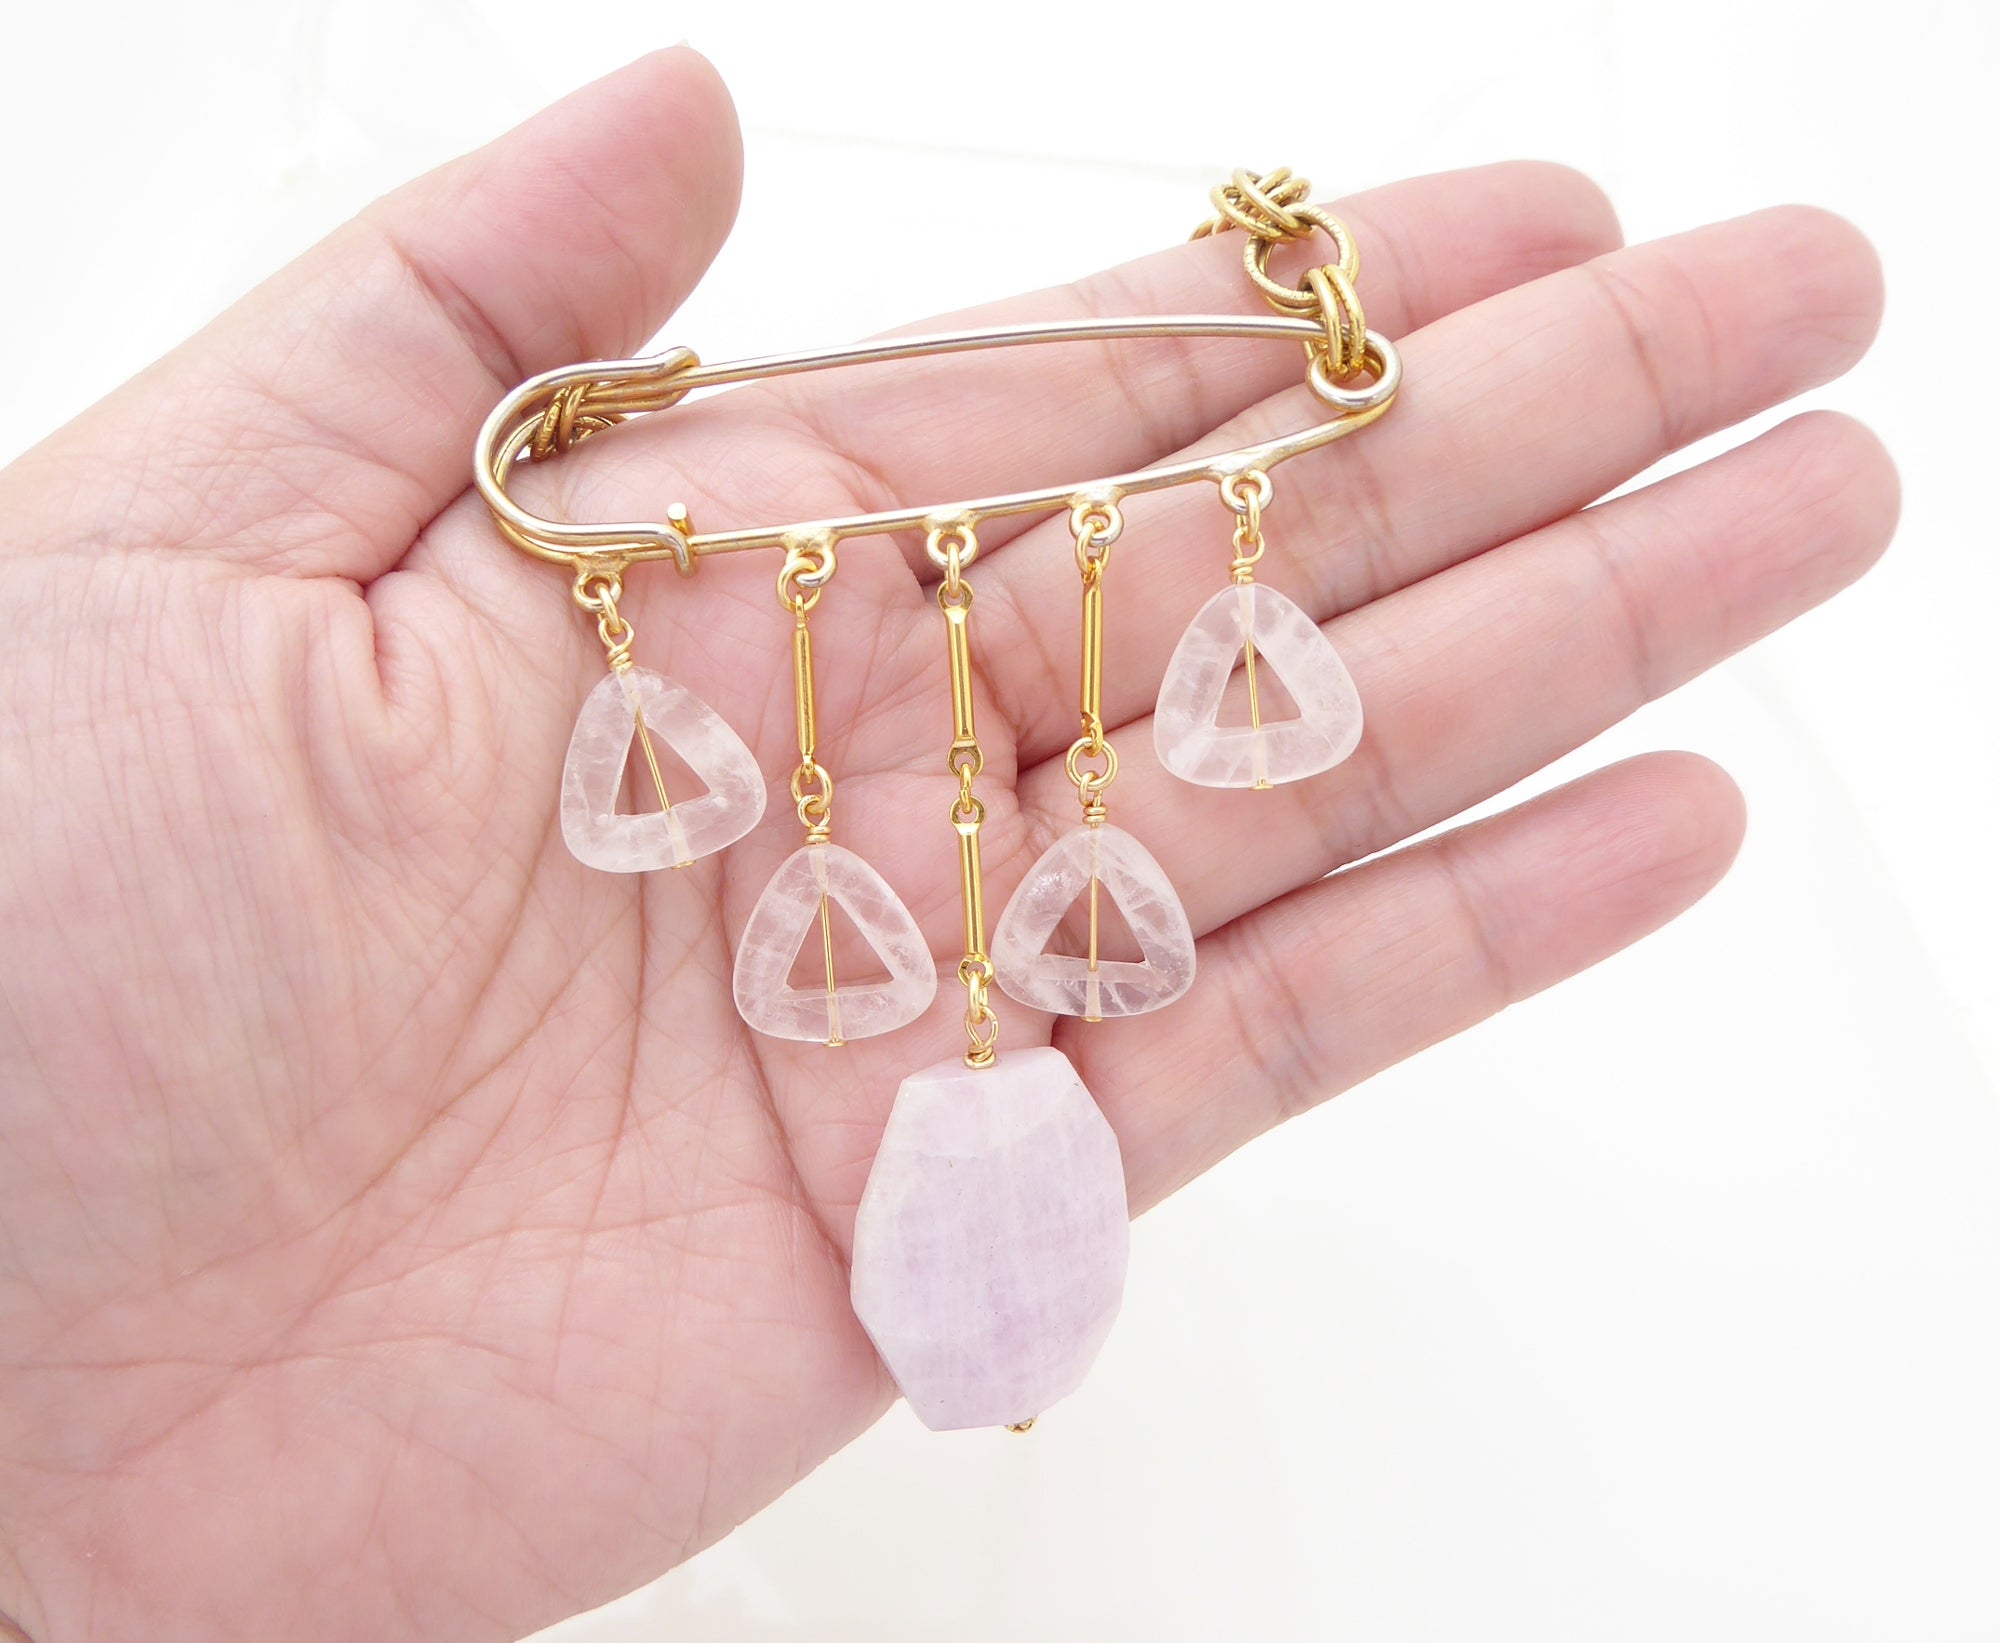 Kunzite and rose quartz safety pin necklace by Jenny Dayco 6